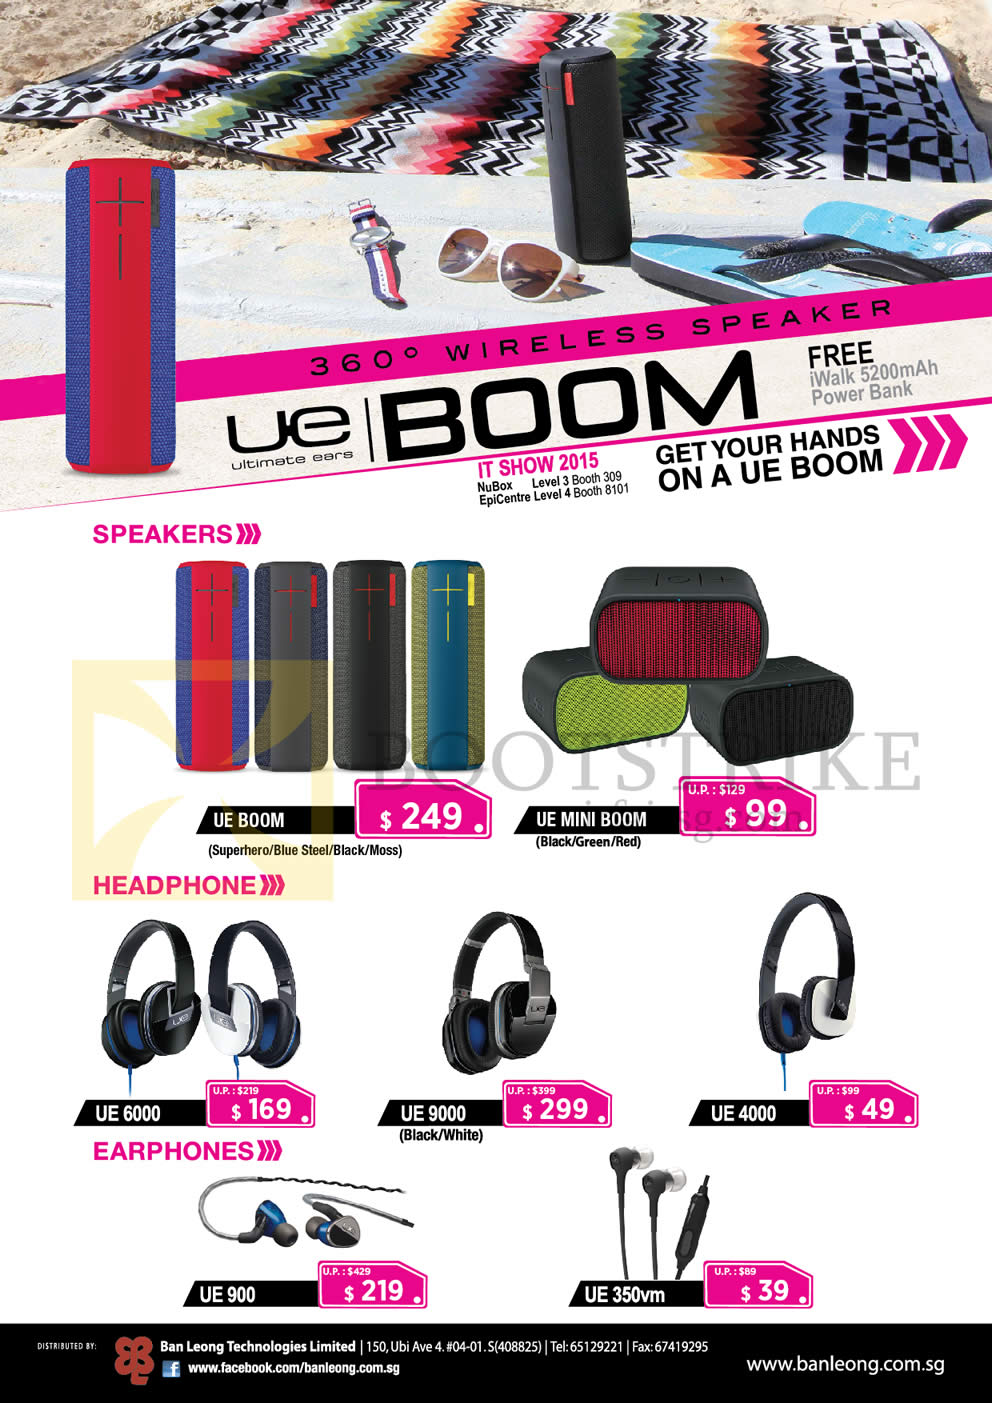 IT SHOW 2015 price list image brochure of Ban Leong Logitech Ultimate Ears Speakers, Headphone, Earphones, UE Boom, UE Mini Book, UE6000, UE9000, UE4000, UE900. UE350vm